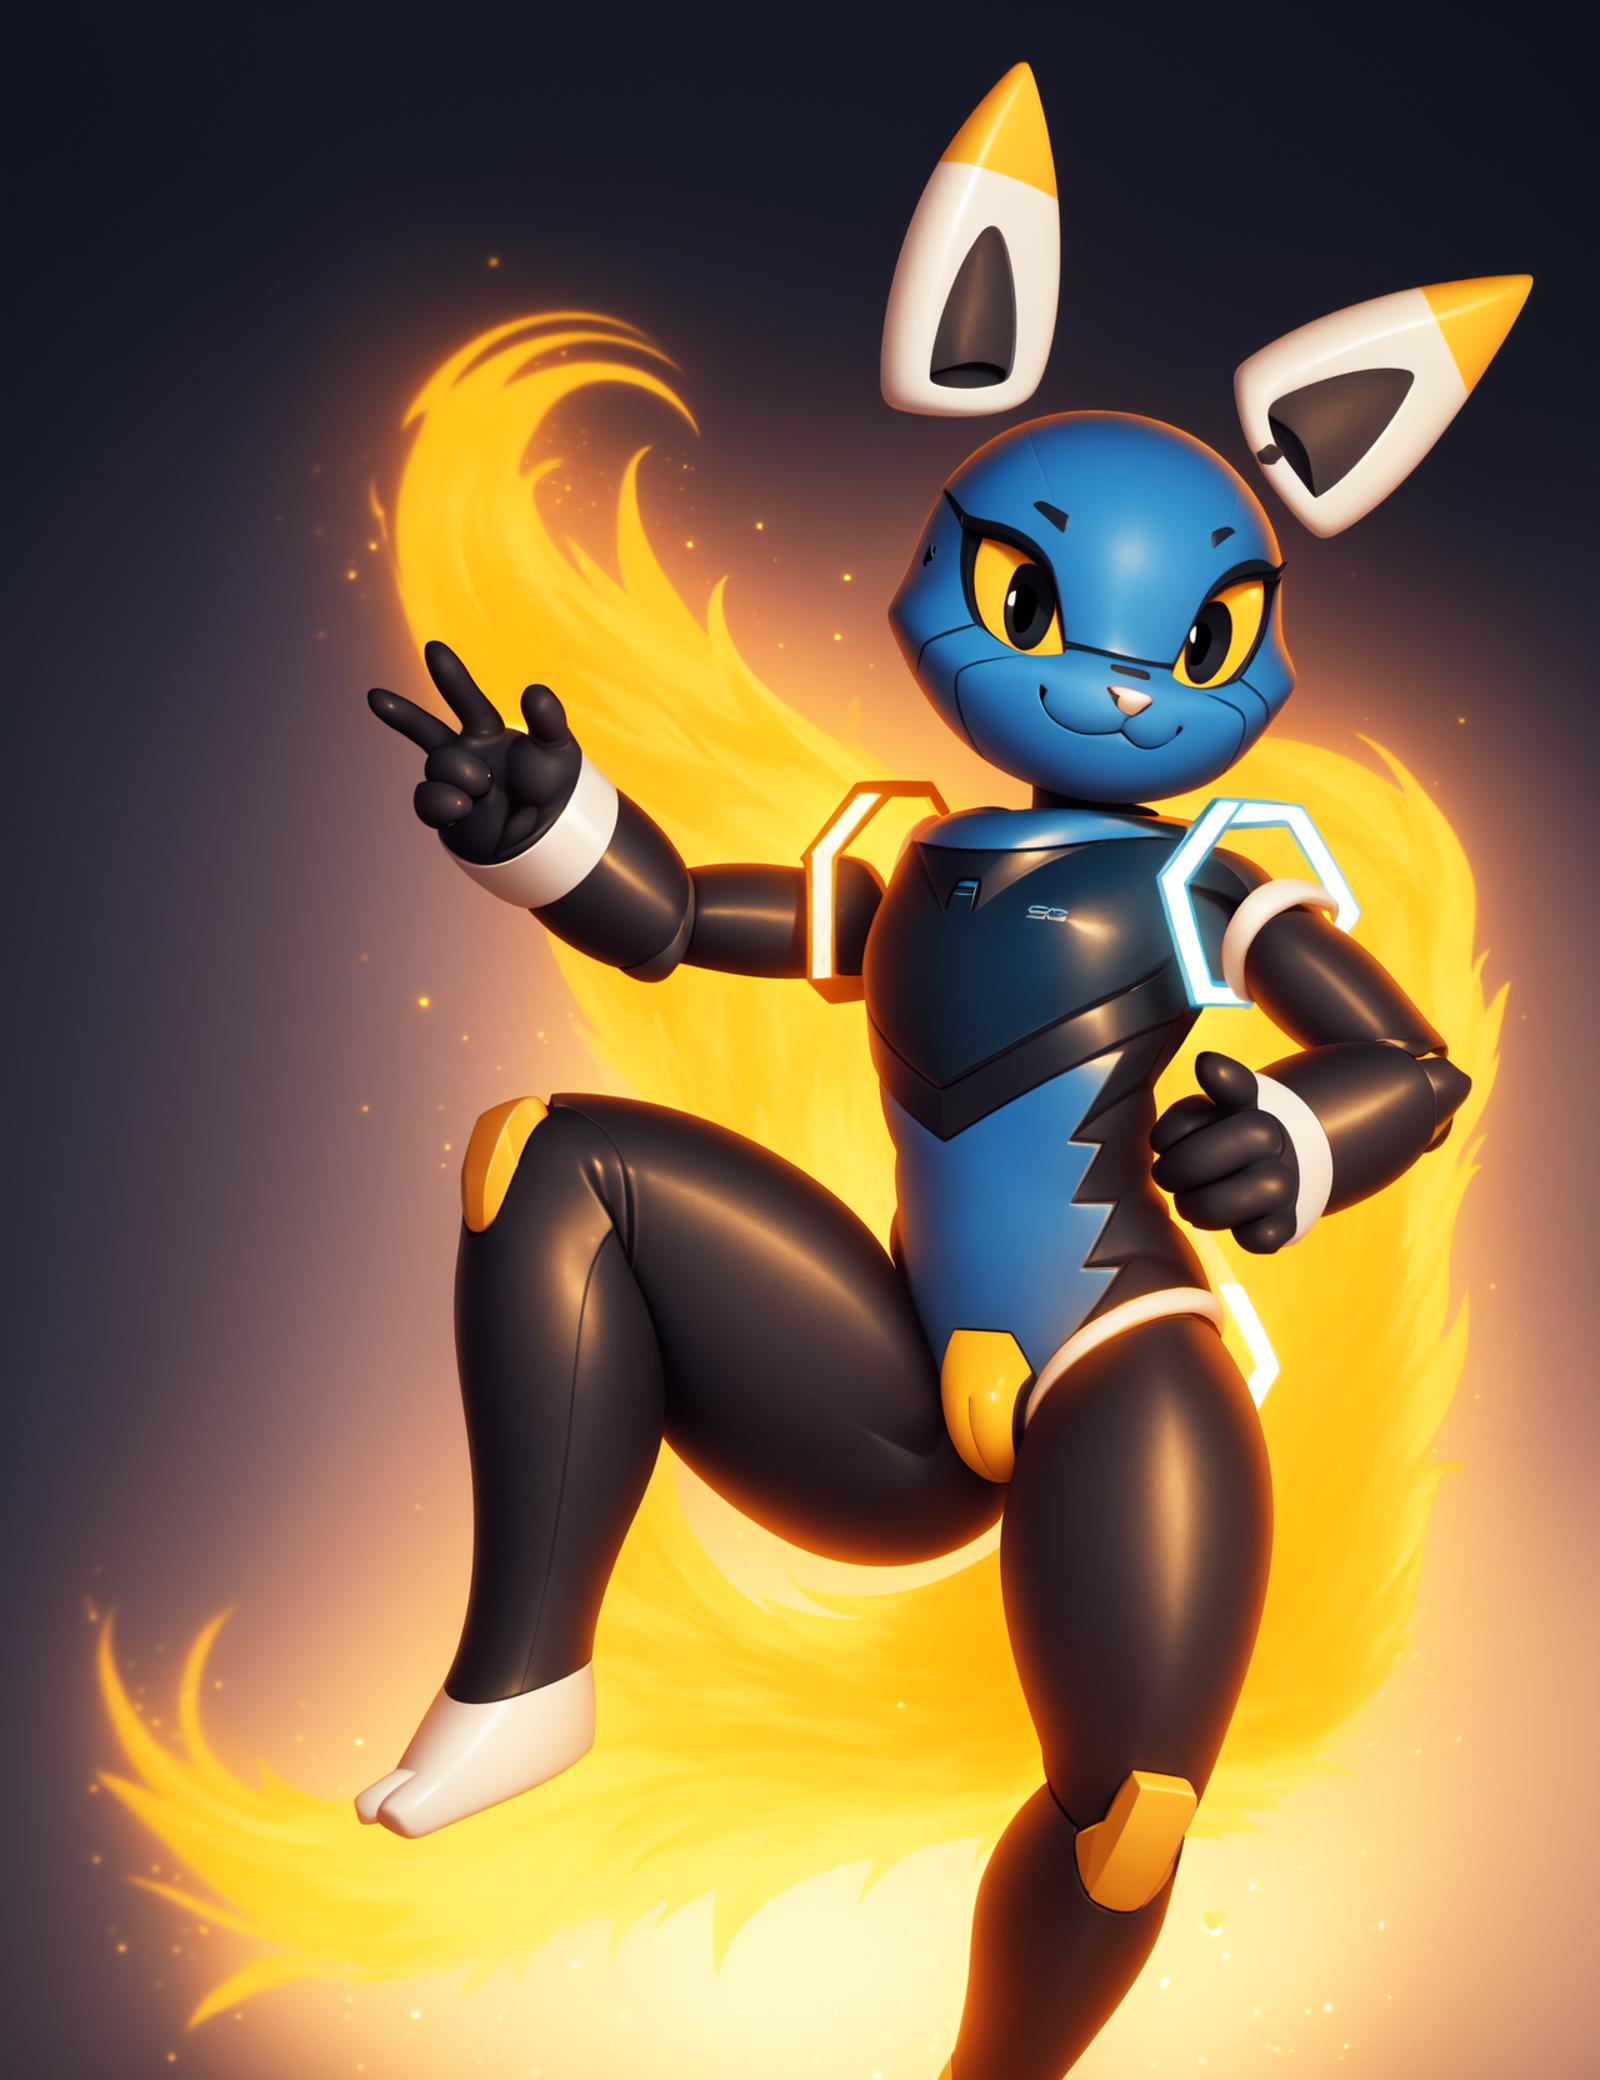 Esix (e621 mascot) image by FinalEclipse